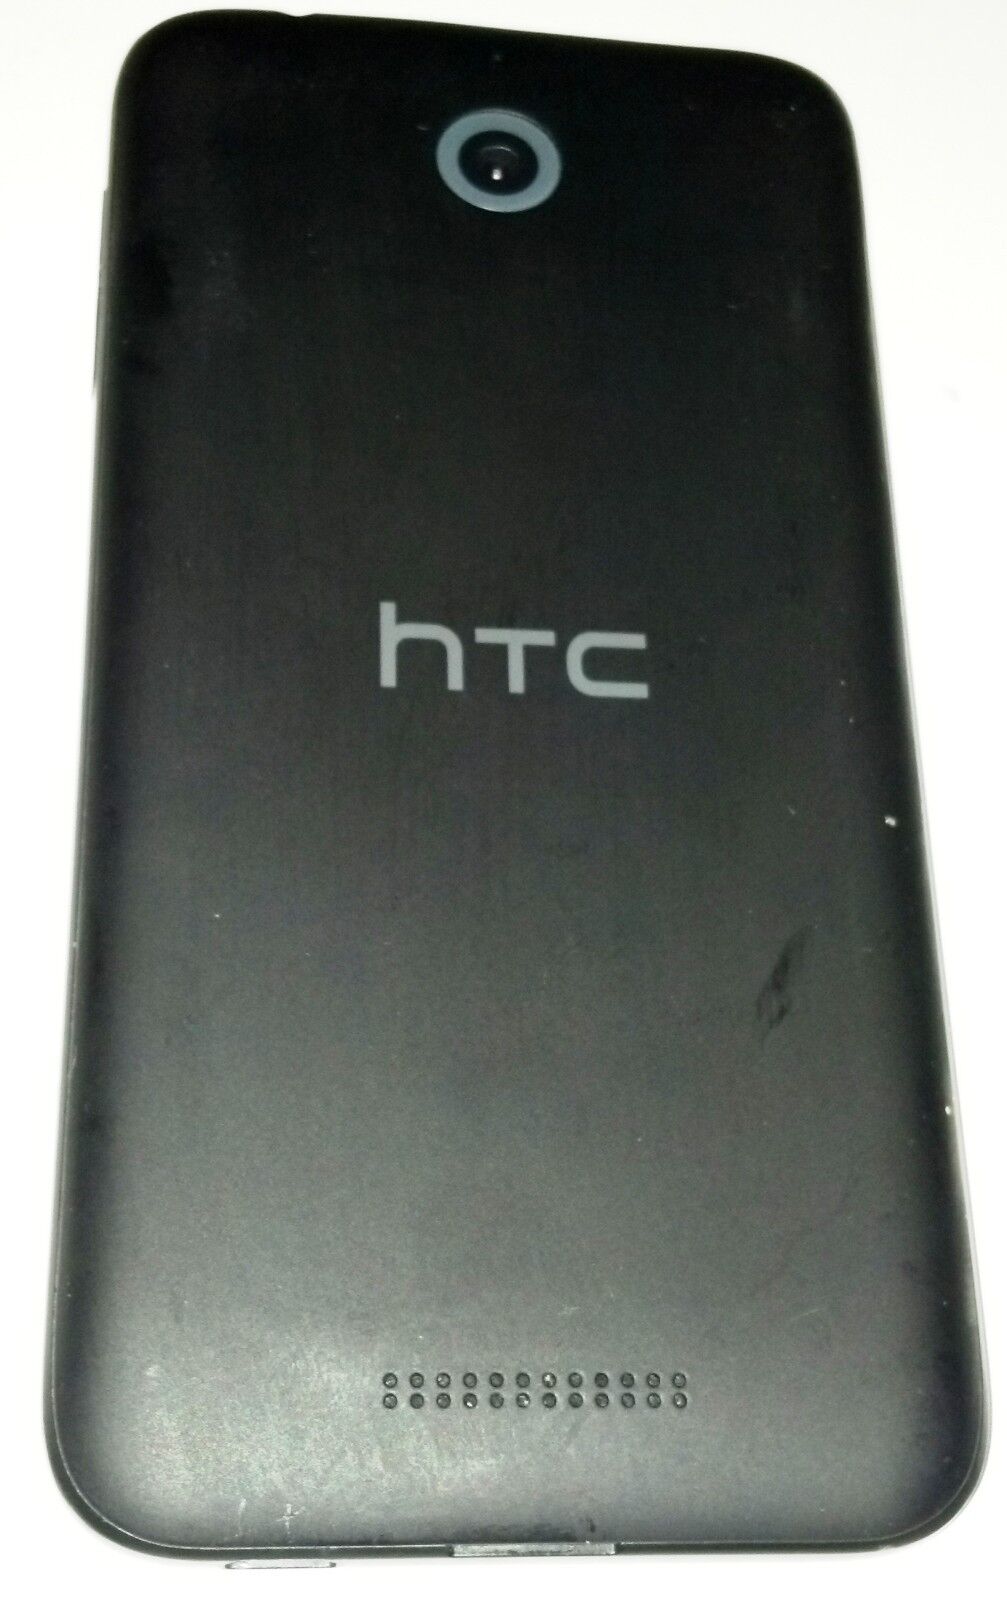 HTC Desire 510 4G LTE Black Virgin Mobile Android Smartphone - Great Condtion Без бренда Desire 4G - фотография #3